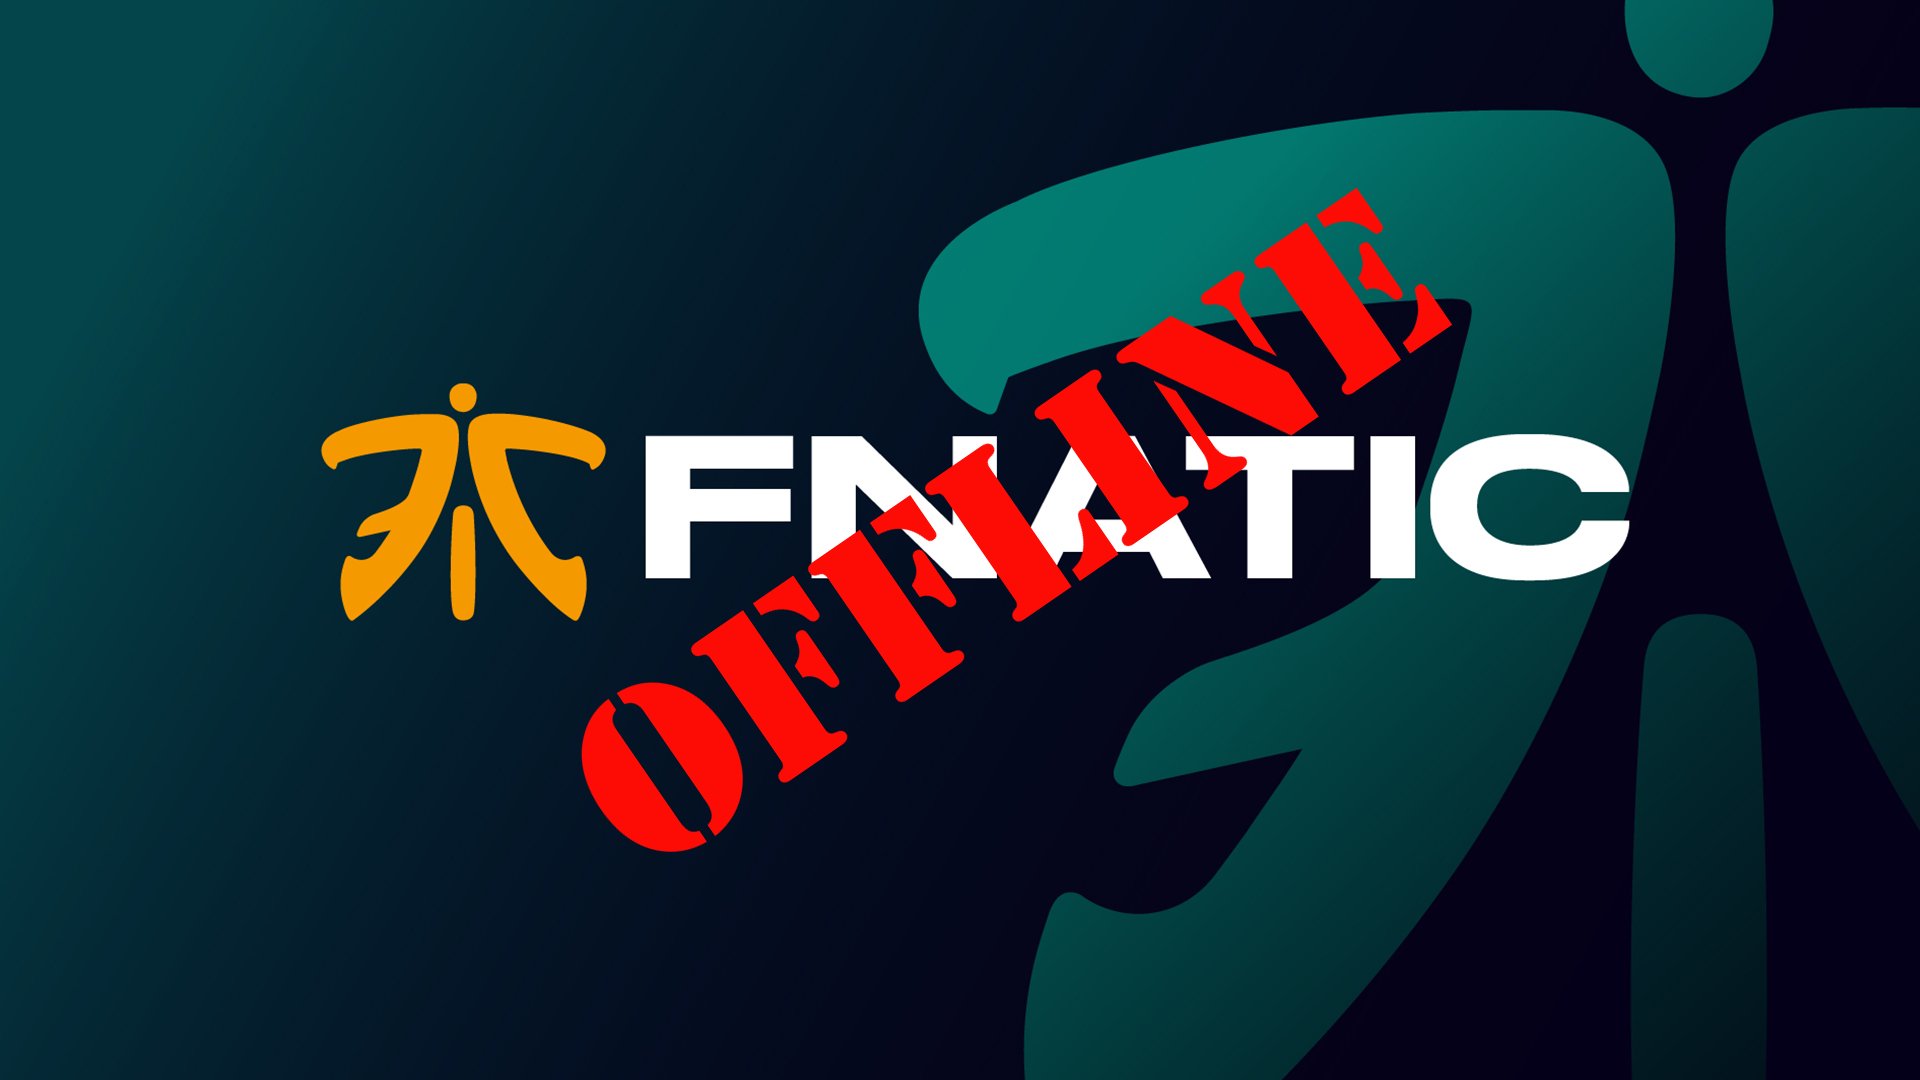 Fnatic Logo offline|Tweet Sam Mathews